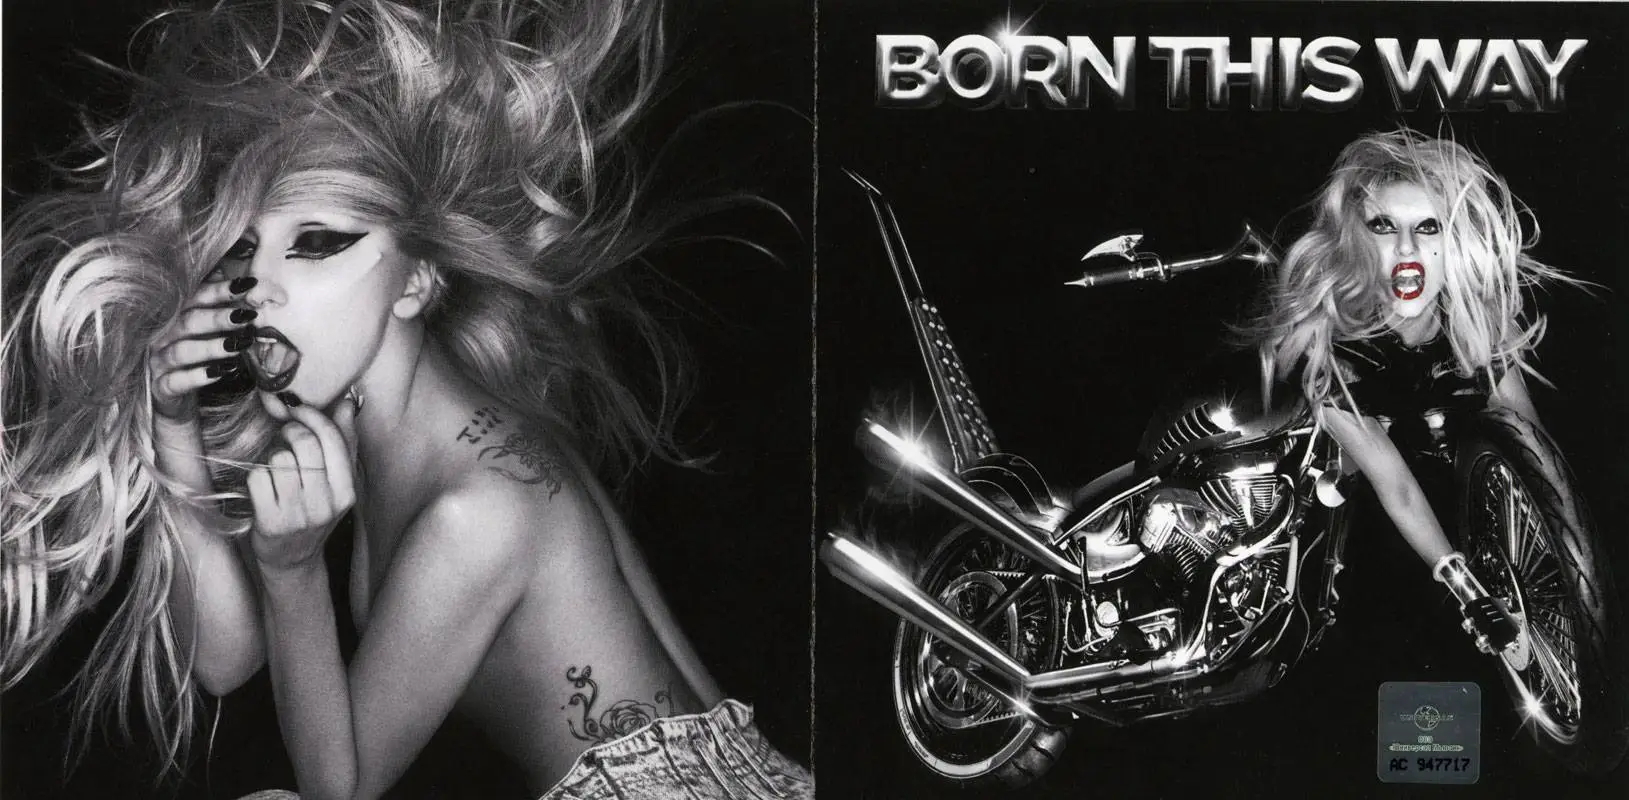 Lady gaga born this. Леди Гага Борн ЗИС Вей обложка. Lady Gaga "born this way". Born this way альбом. Леди Гага альбом born this way.